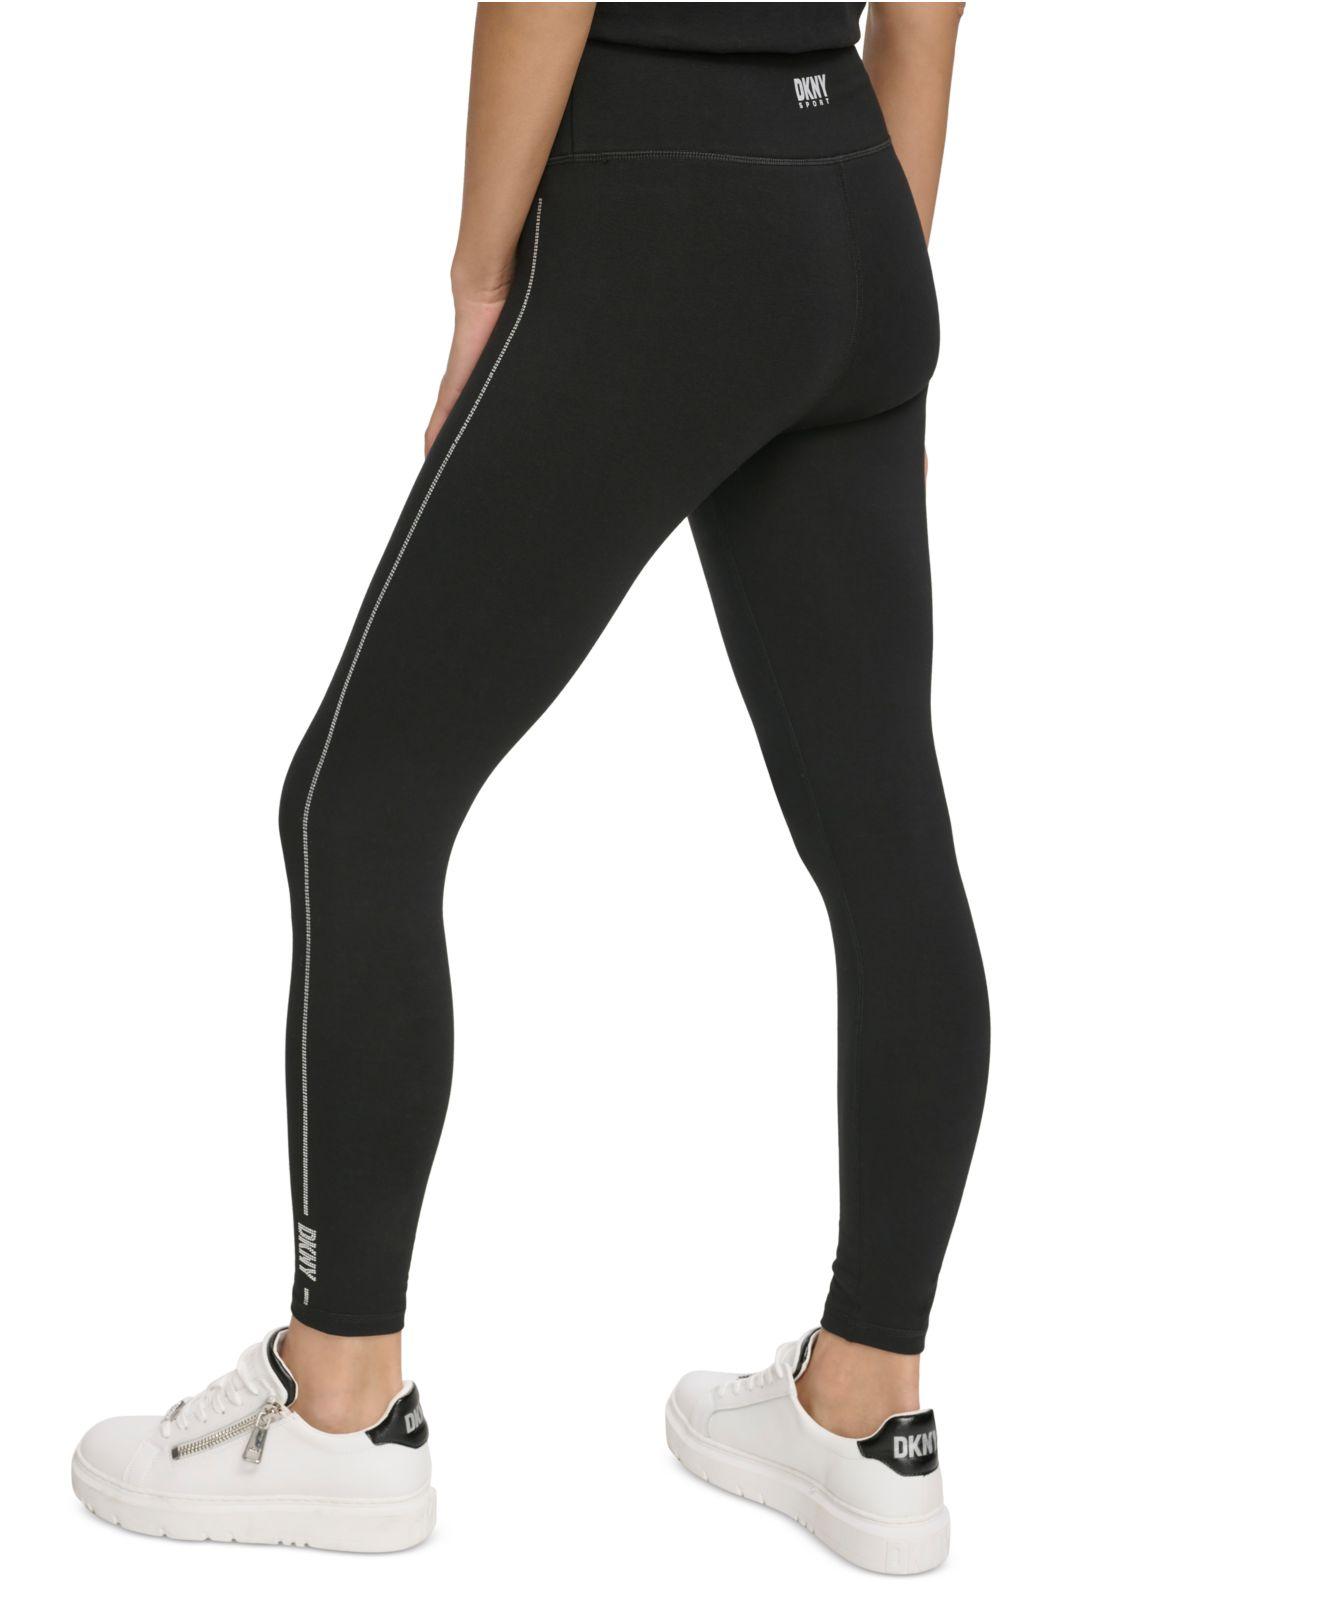 DKNY Workout Leggings in Womens Workout Bottoms - Walmart.com